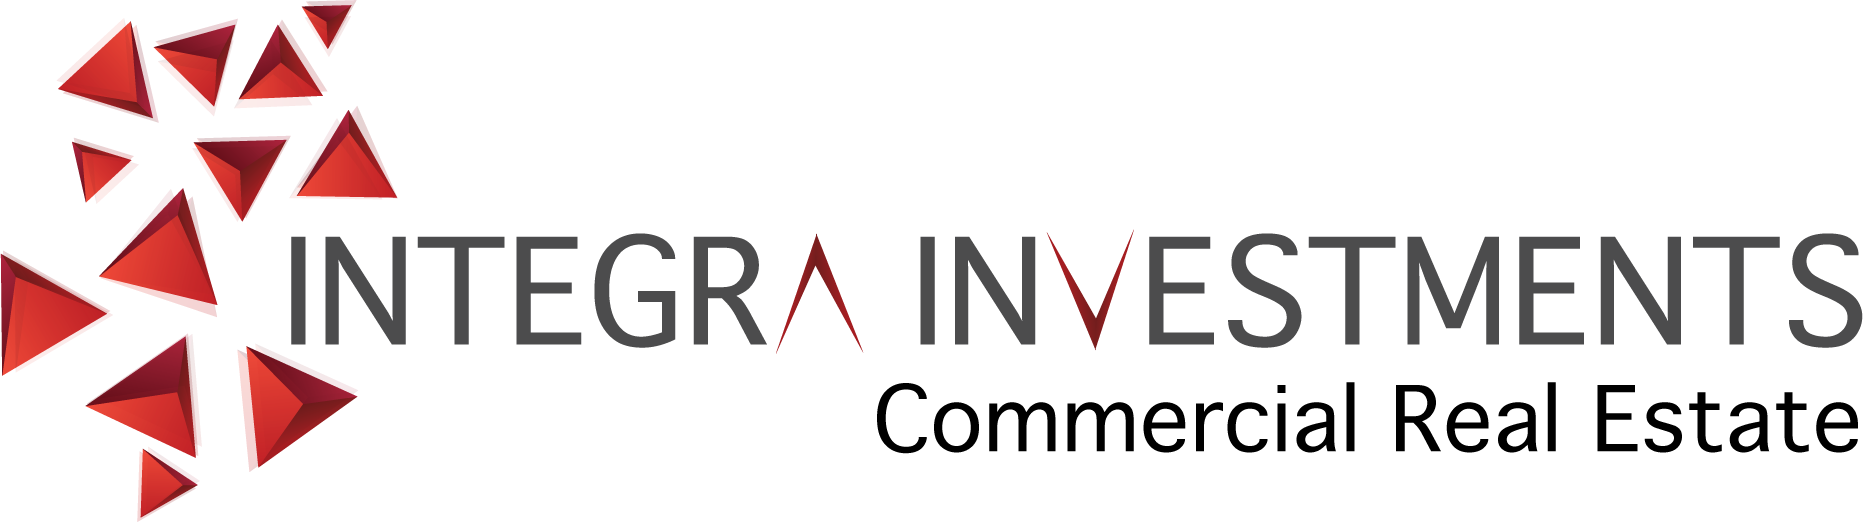 Integra RE Investments logo